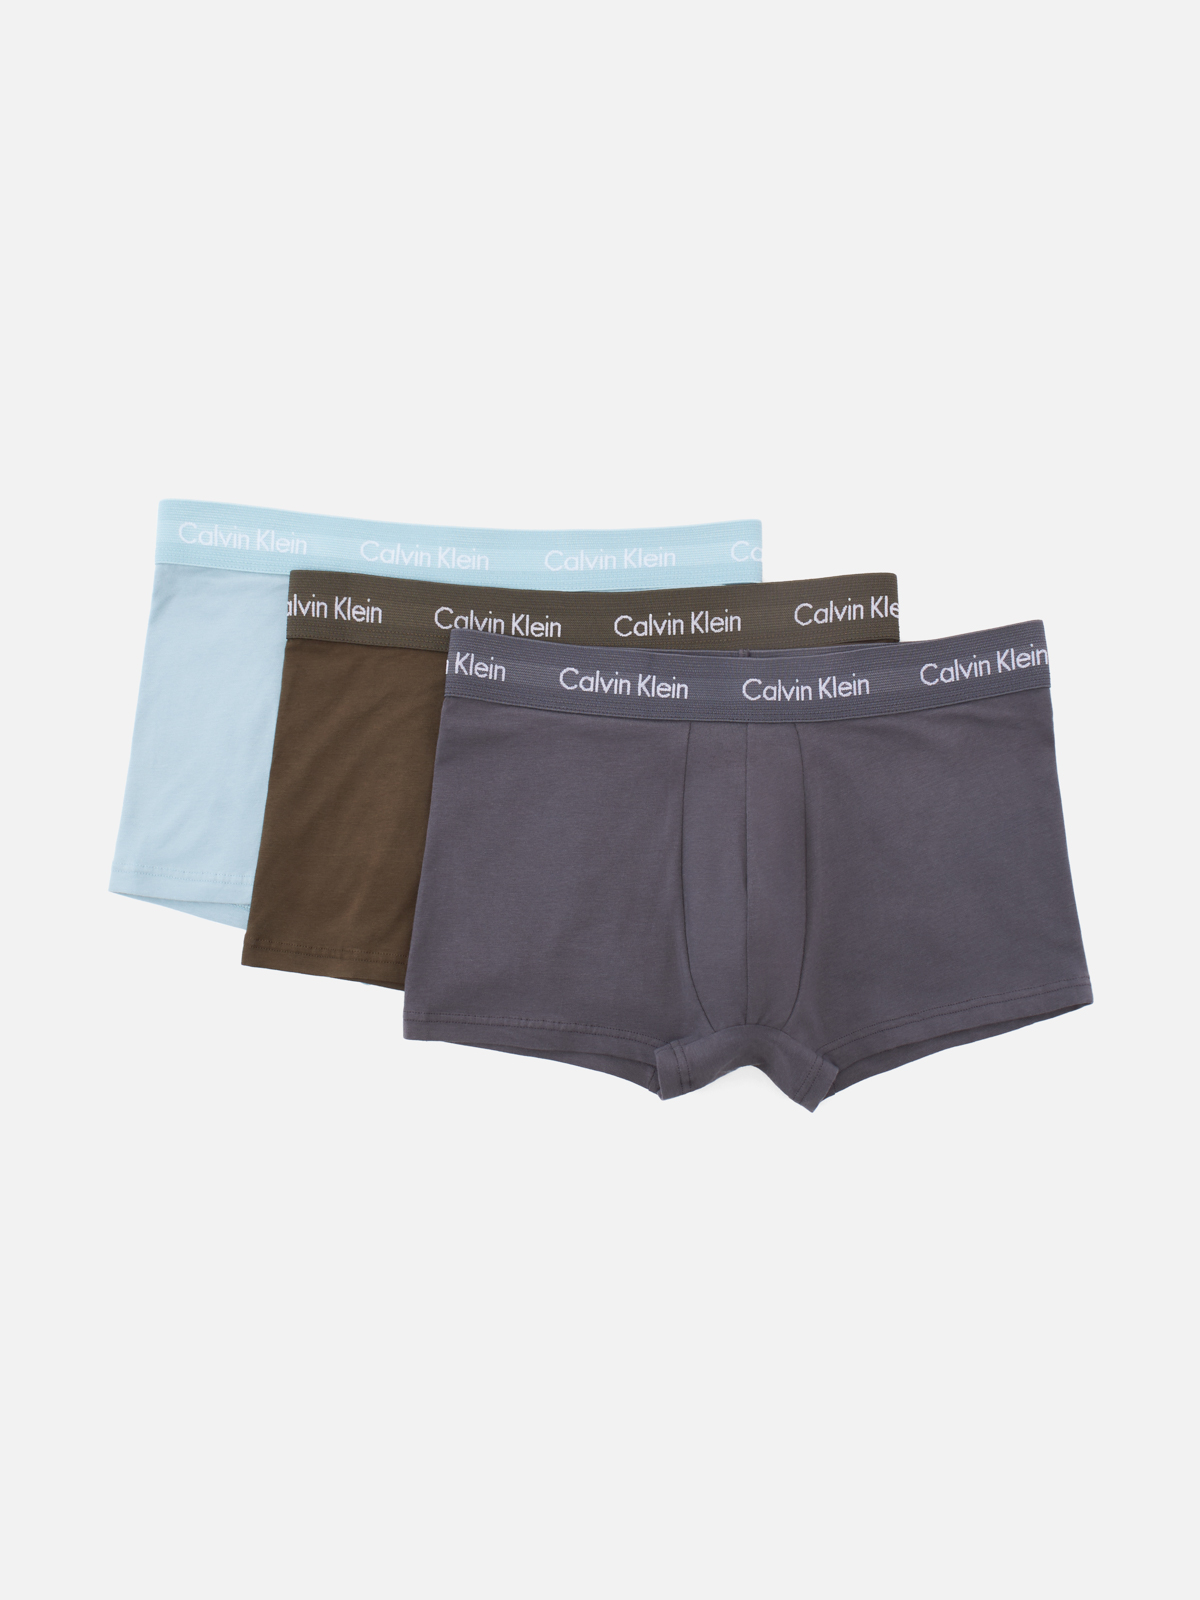 Комплект белья Calvin Klein для мужчин, grey, tourmaline, olive, размер XS, Sleek